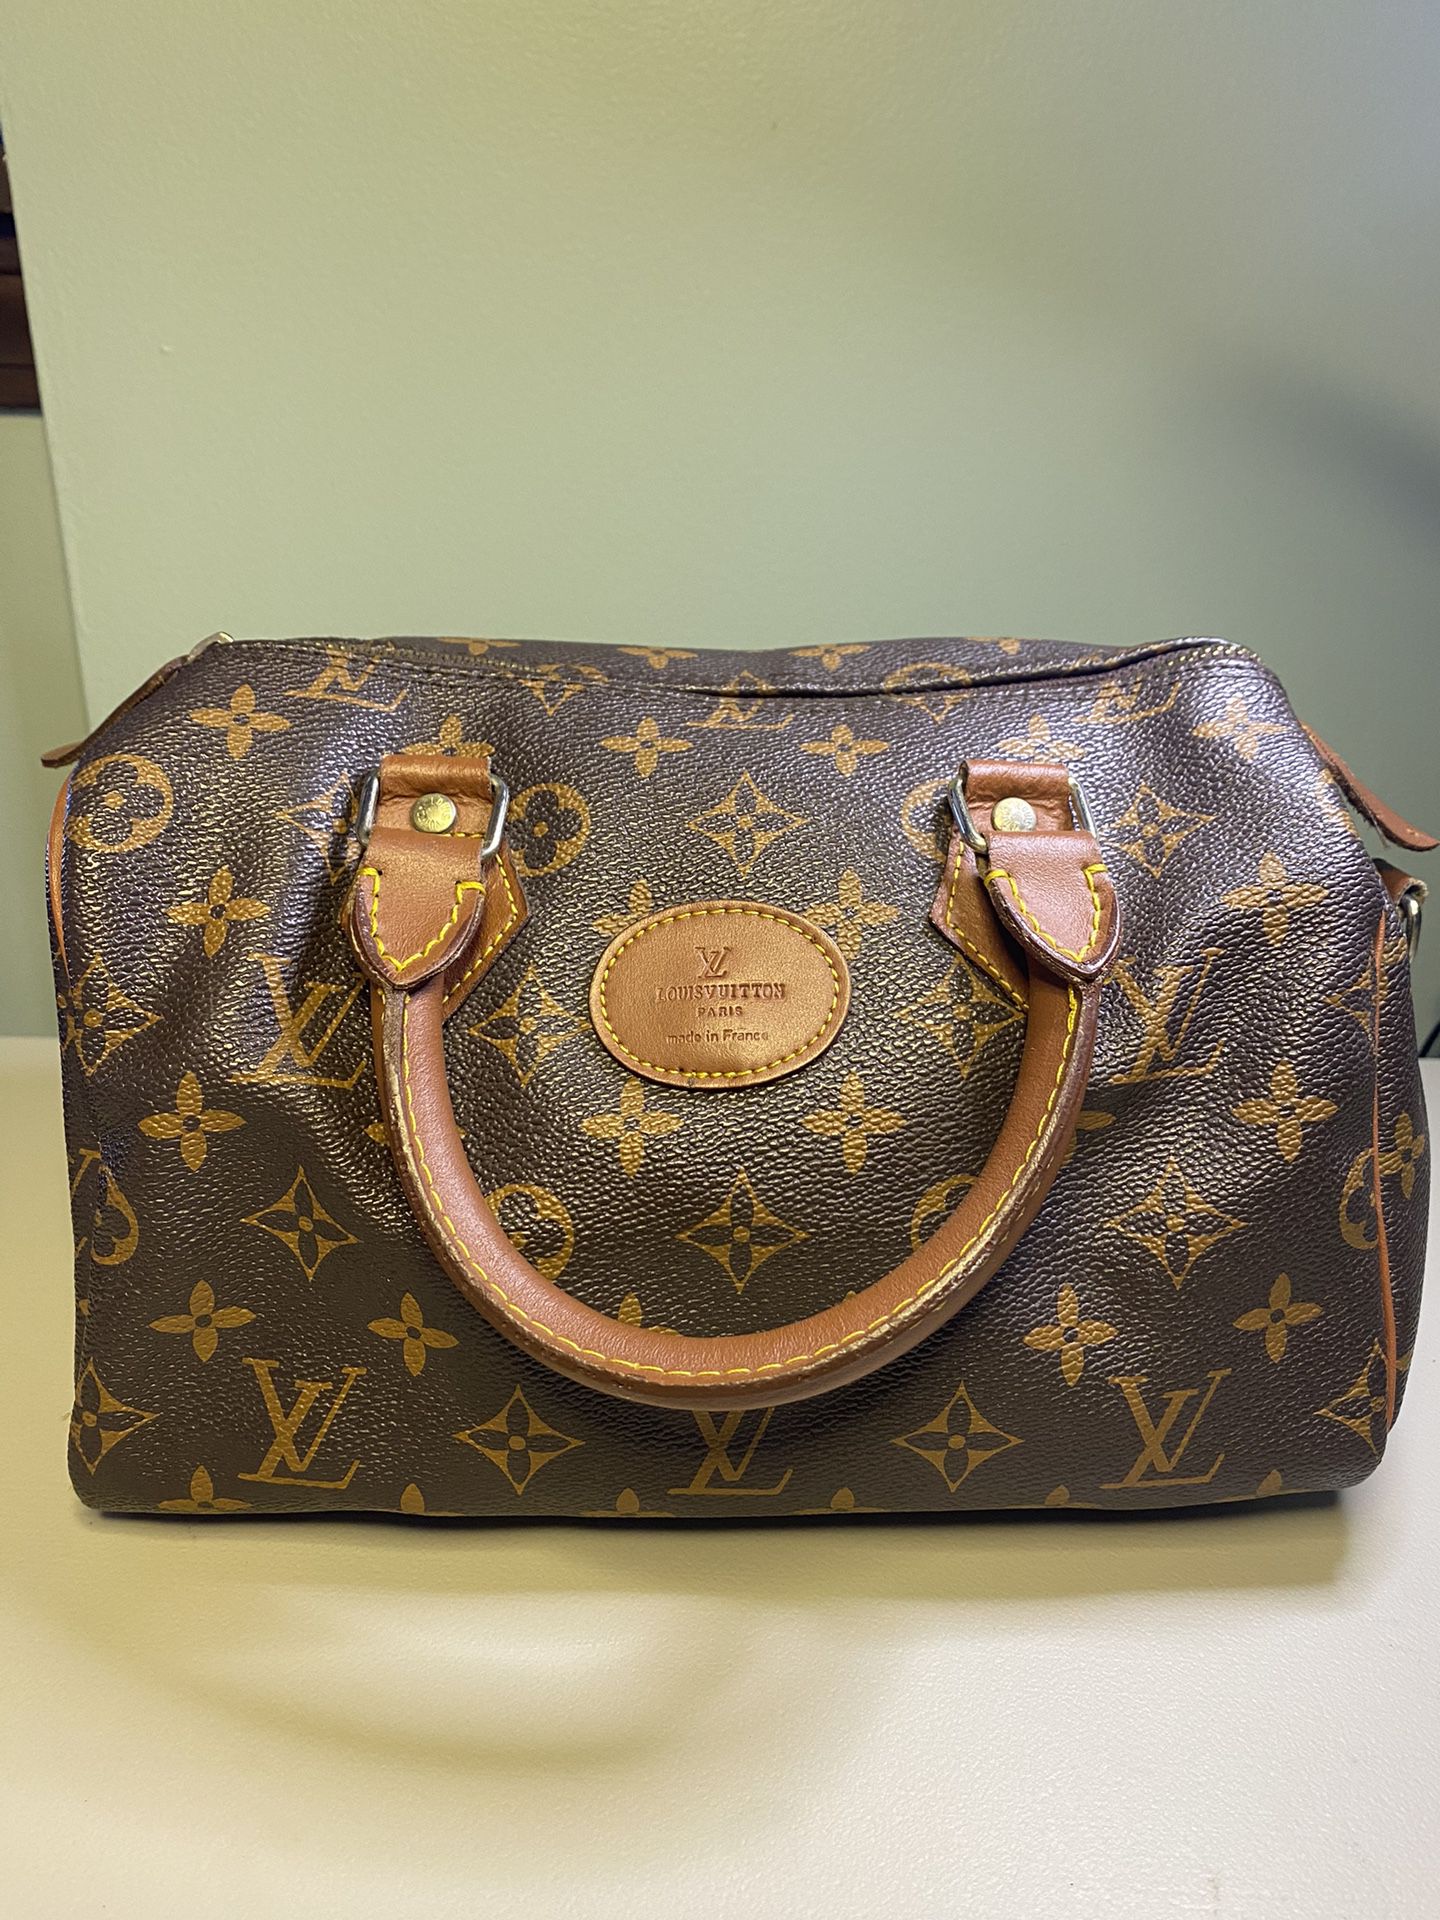 Vintage Louis Vuitton Handbag